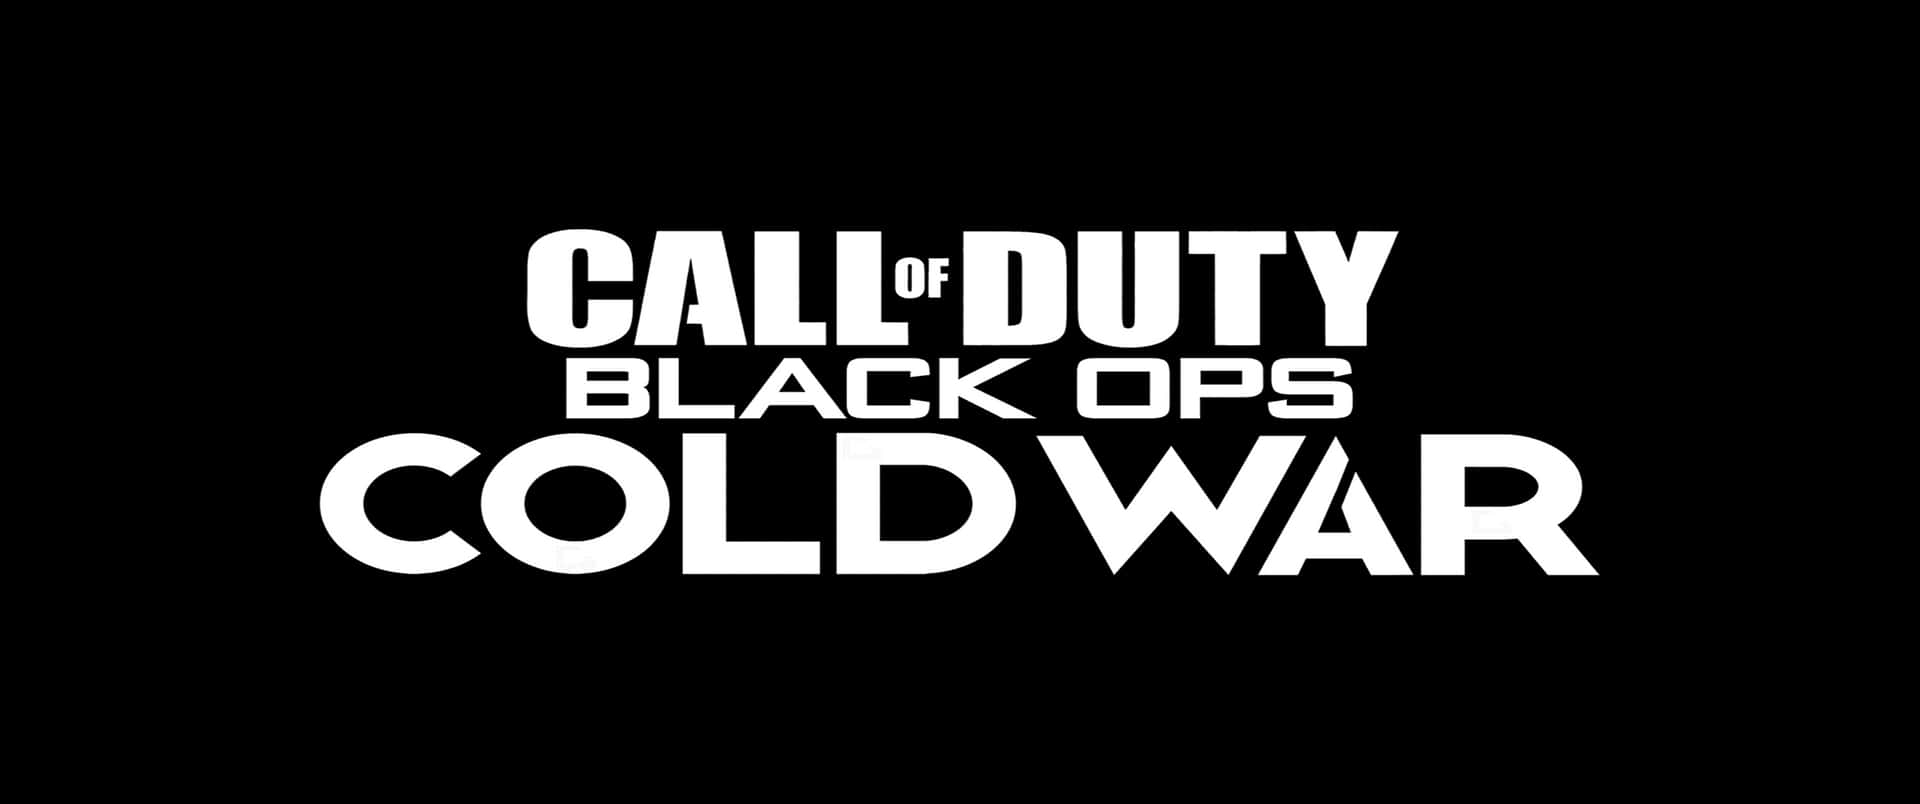 3440x1440p Fondods De Call Of Duty Black Ops Cold War